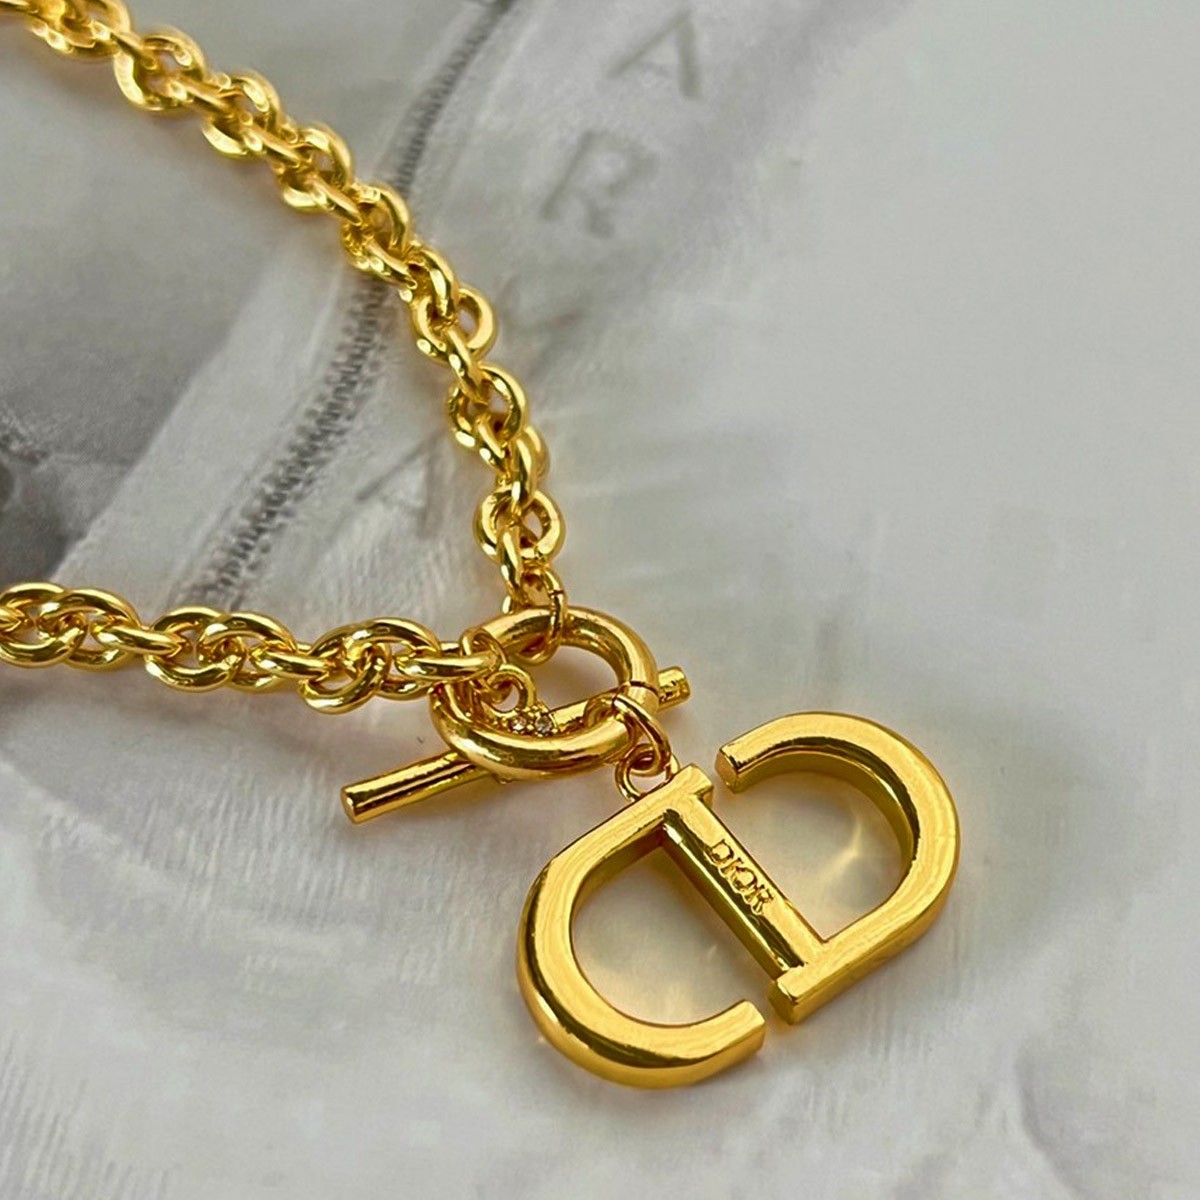 christian Dior chain set • • • • •... - Dayri Jewelry design | Facebook